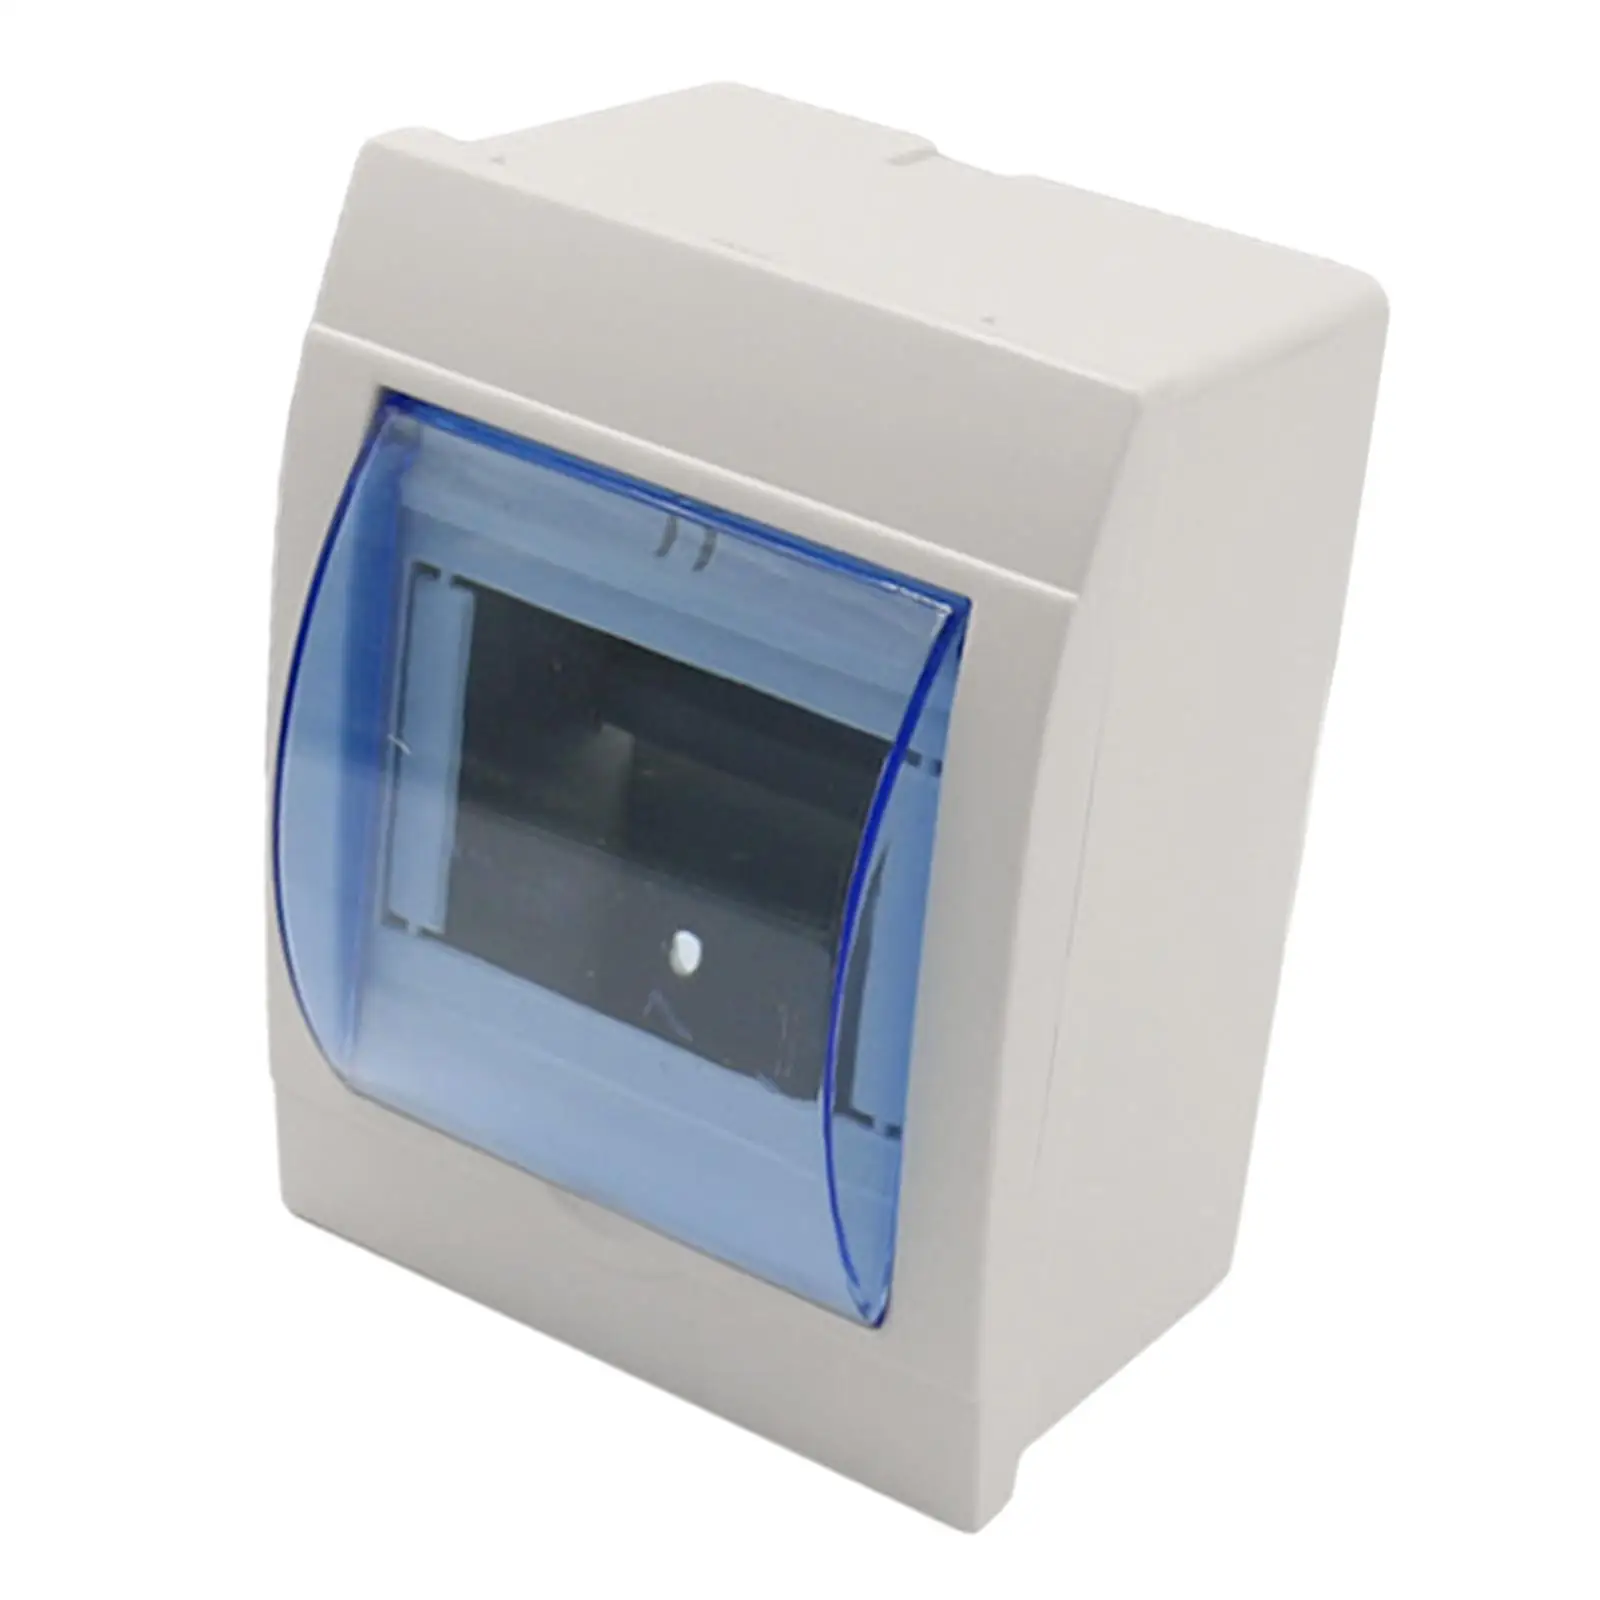 Circuit Breaker Protection Box Sturdy Practical for Restaurant Bathroom